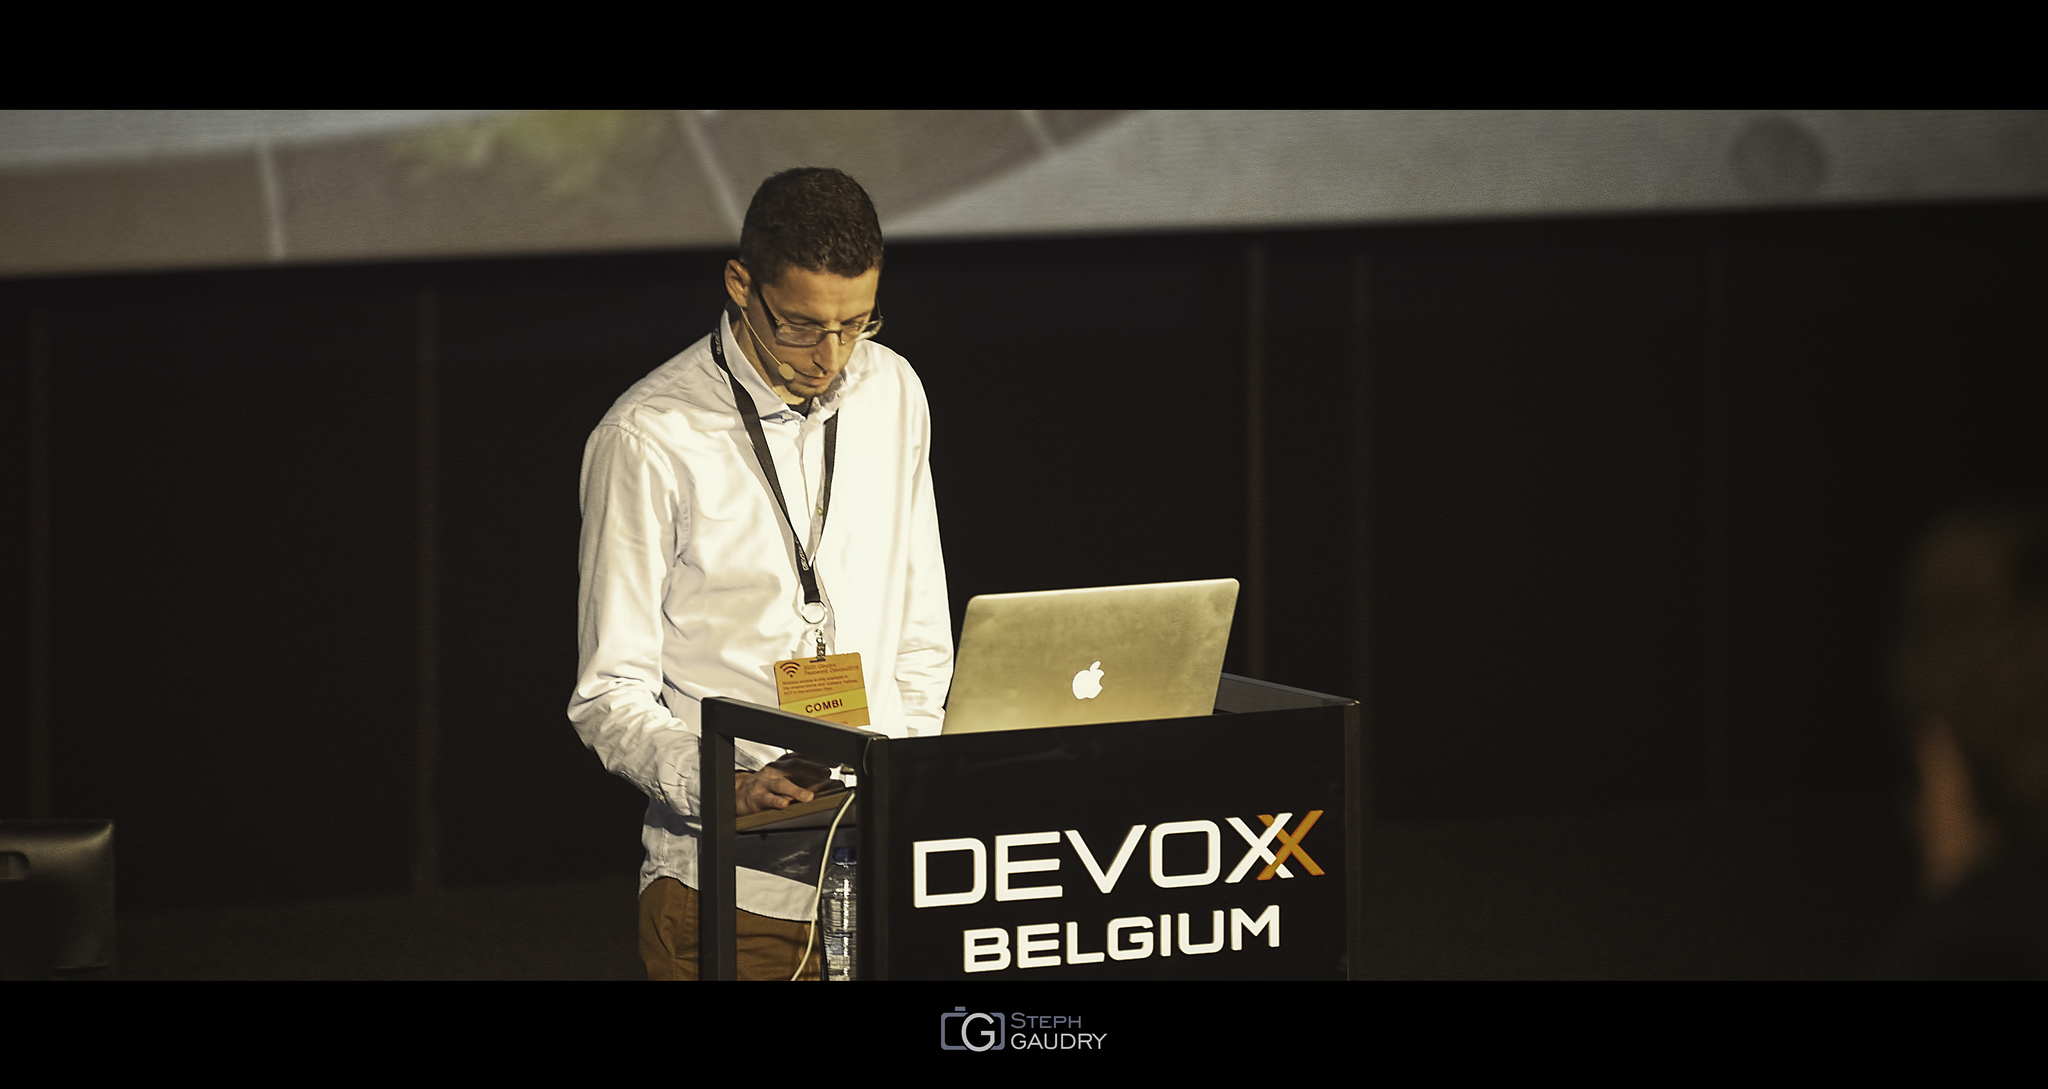 Tom Vleminckx @ Devoxx2015 - JMH [Cliquez pour lancer le diaporama]